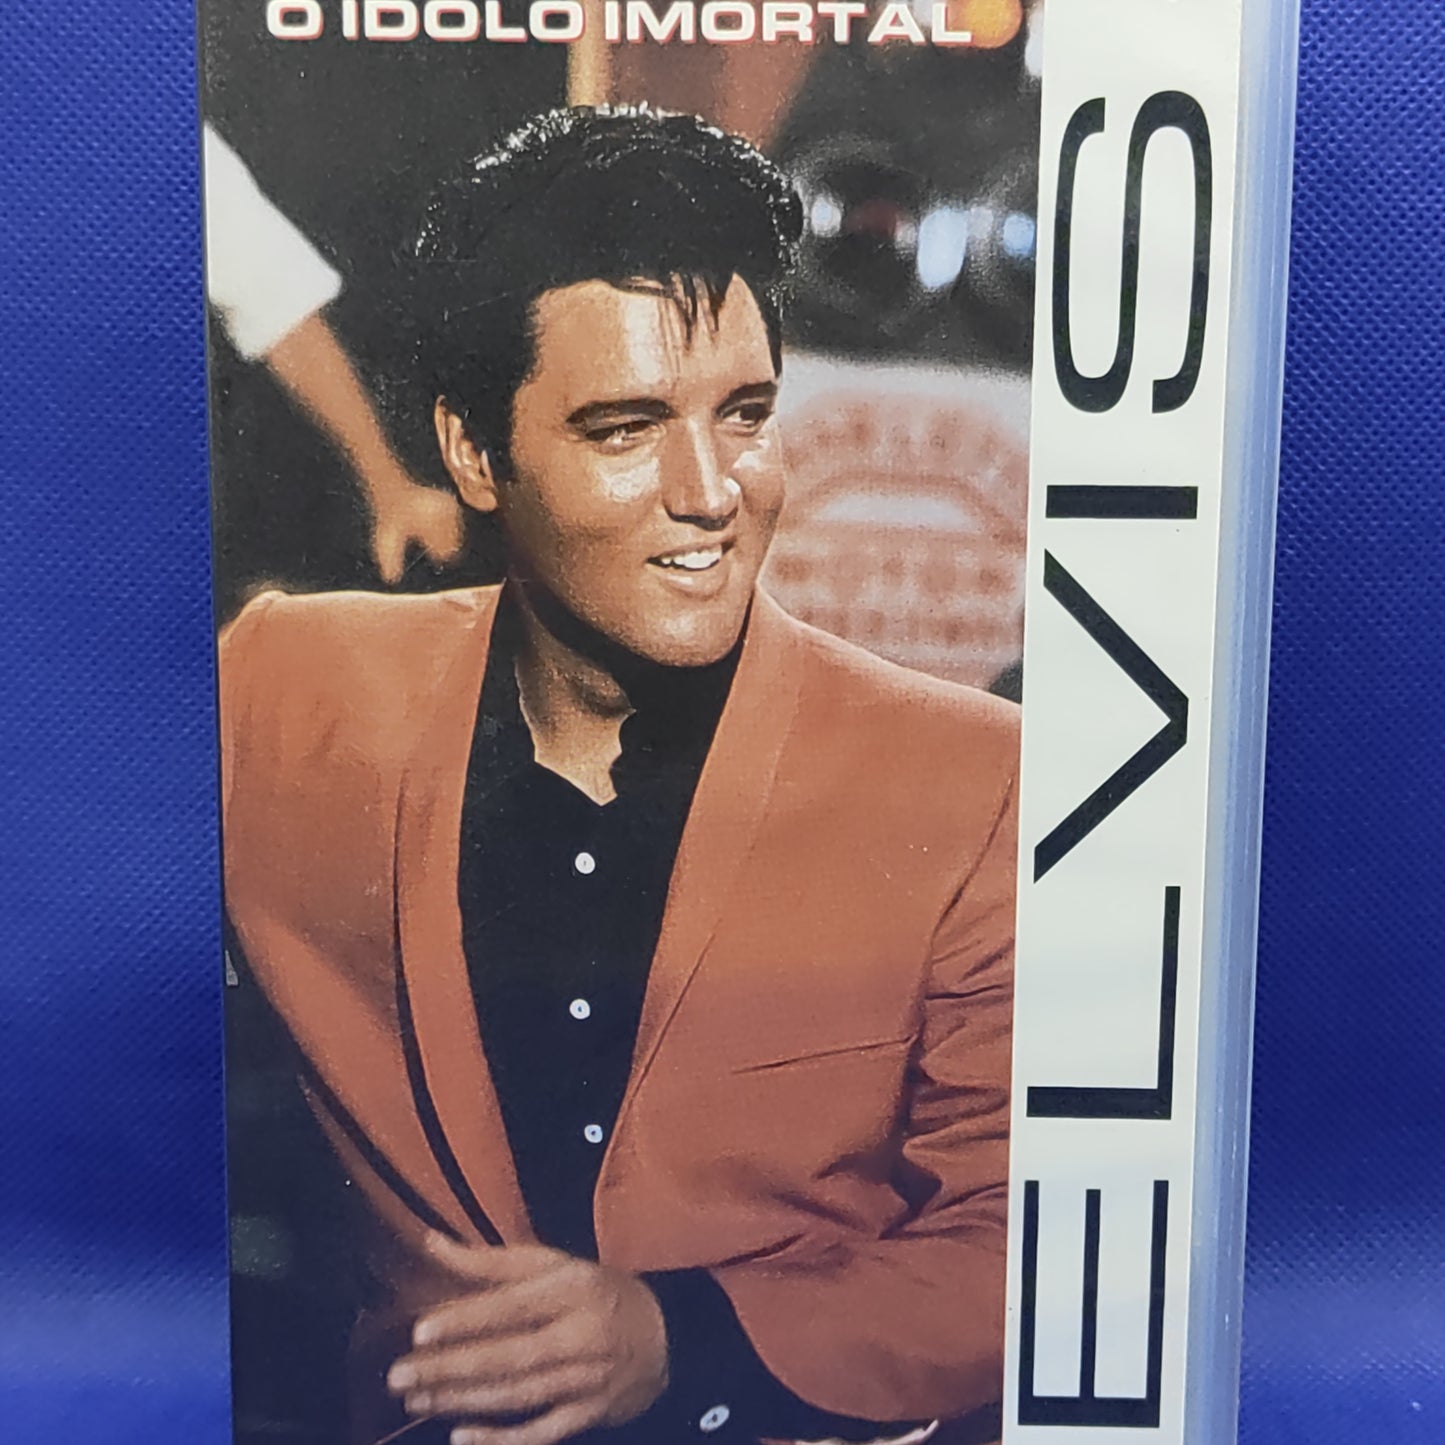 Elvis Presley - Elvis o ídolo imortal